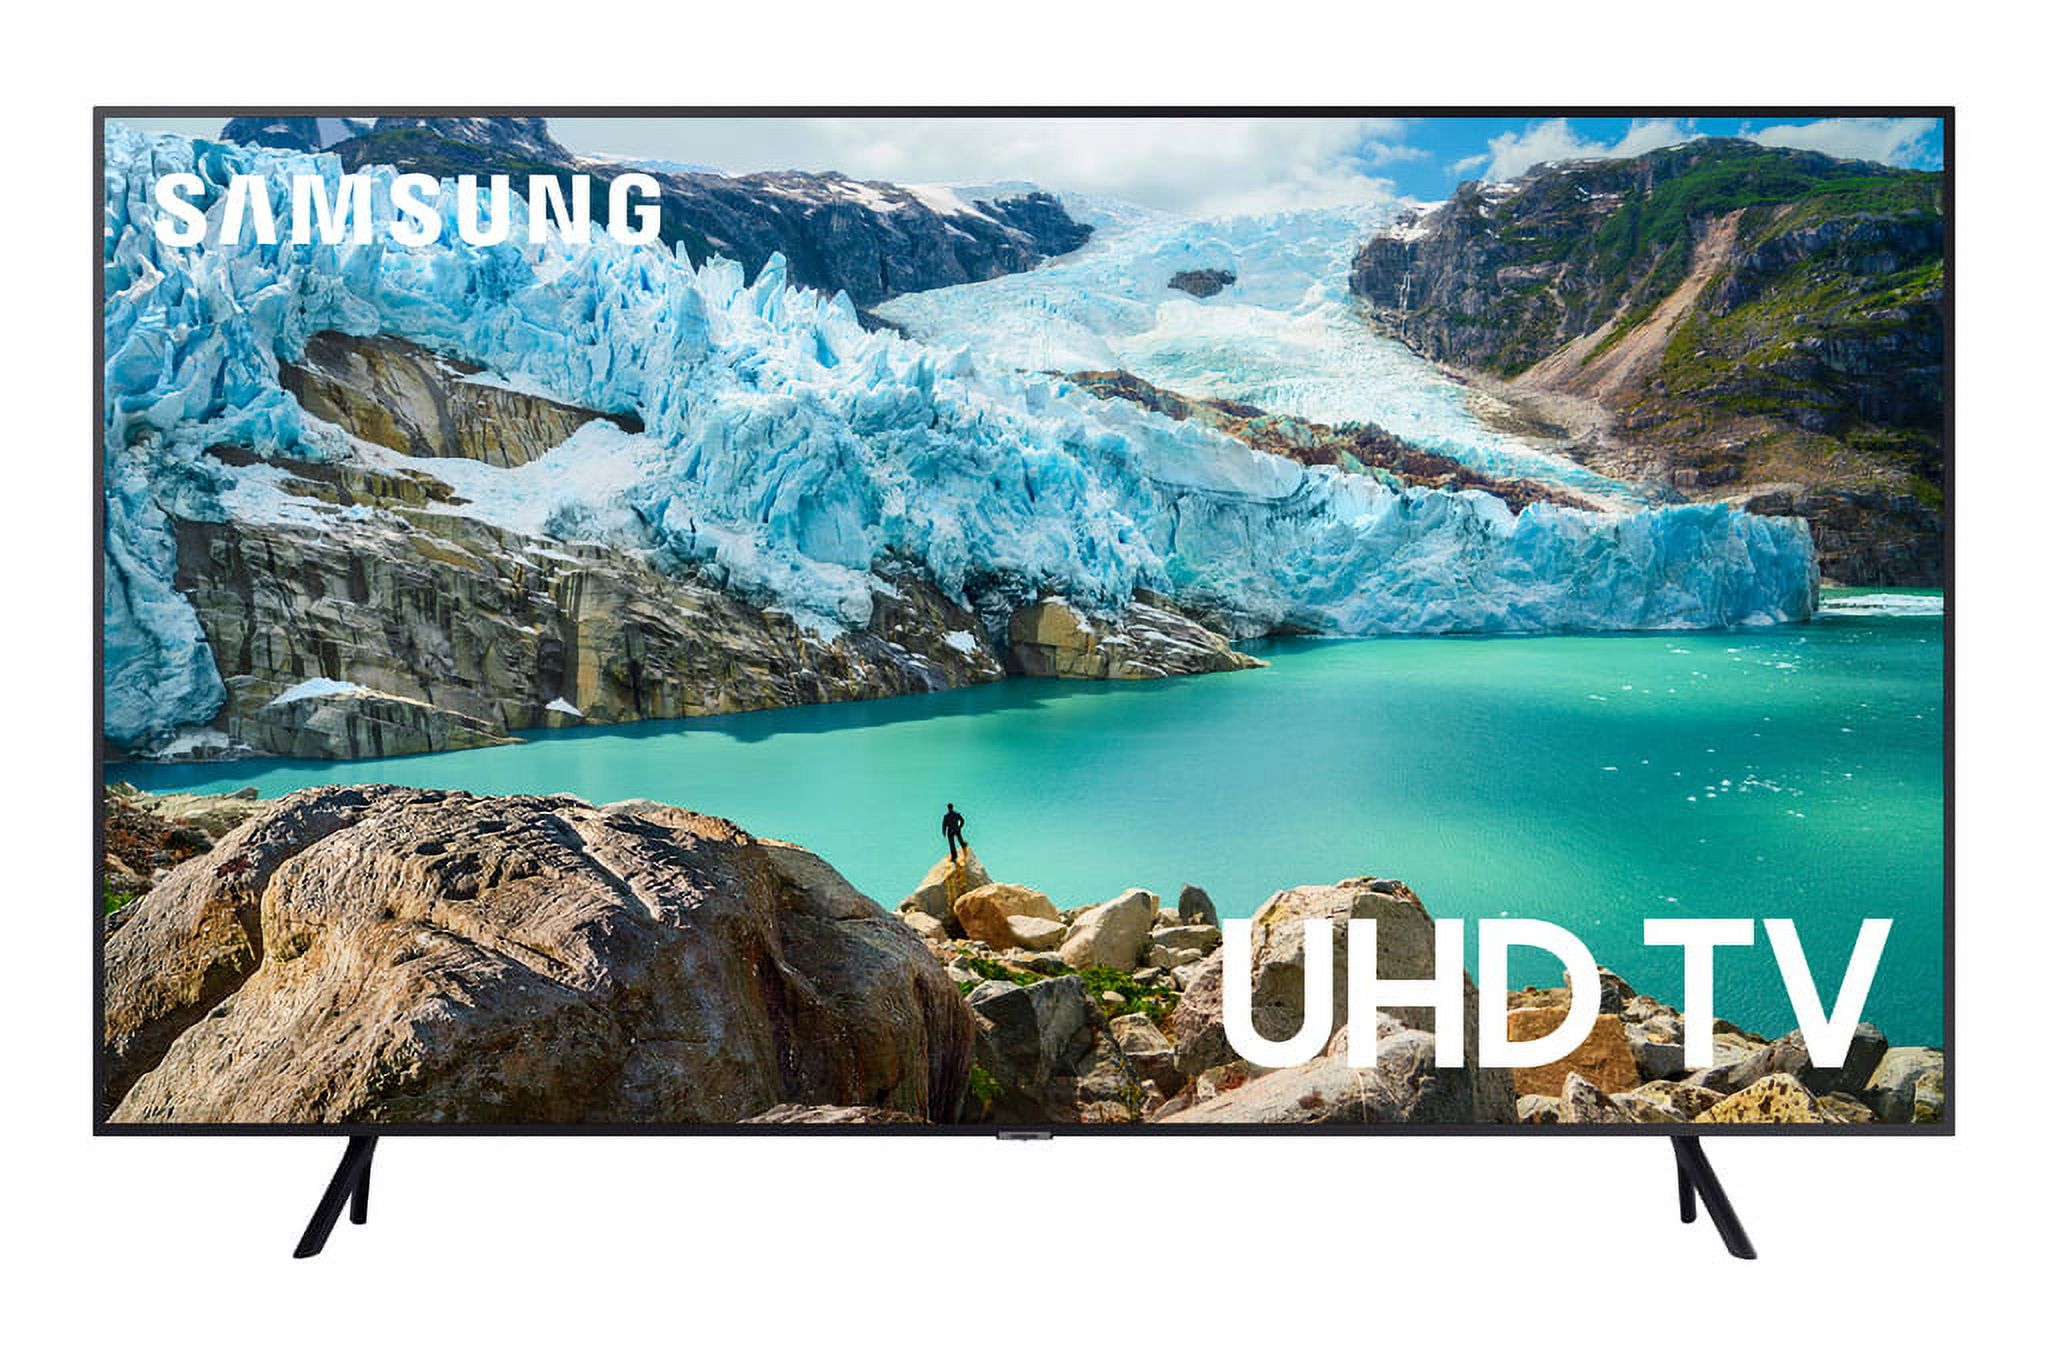 70 Samsung 4k Smart Tv, 6900 Series - image 1 of 7